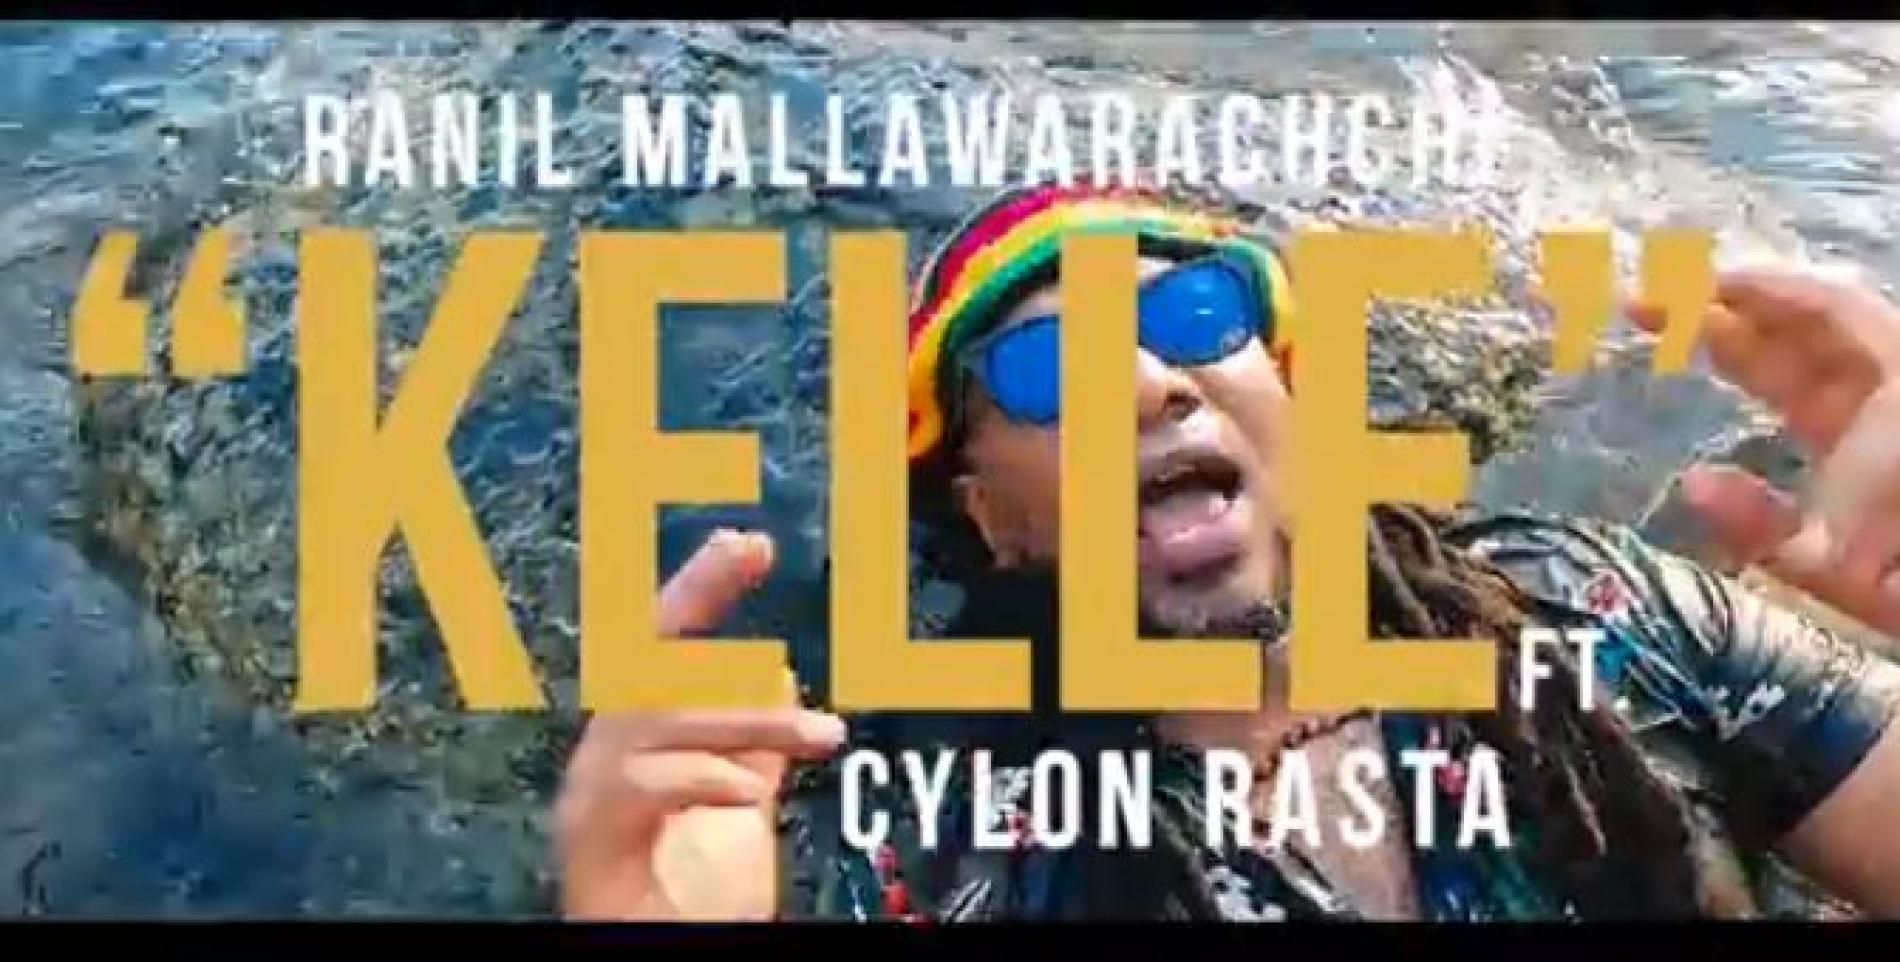 New Music : Kelle – Ranil Mallawarachchi ft Ceylon Rasta (Onedrope Reggae Remake)